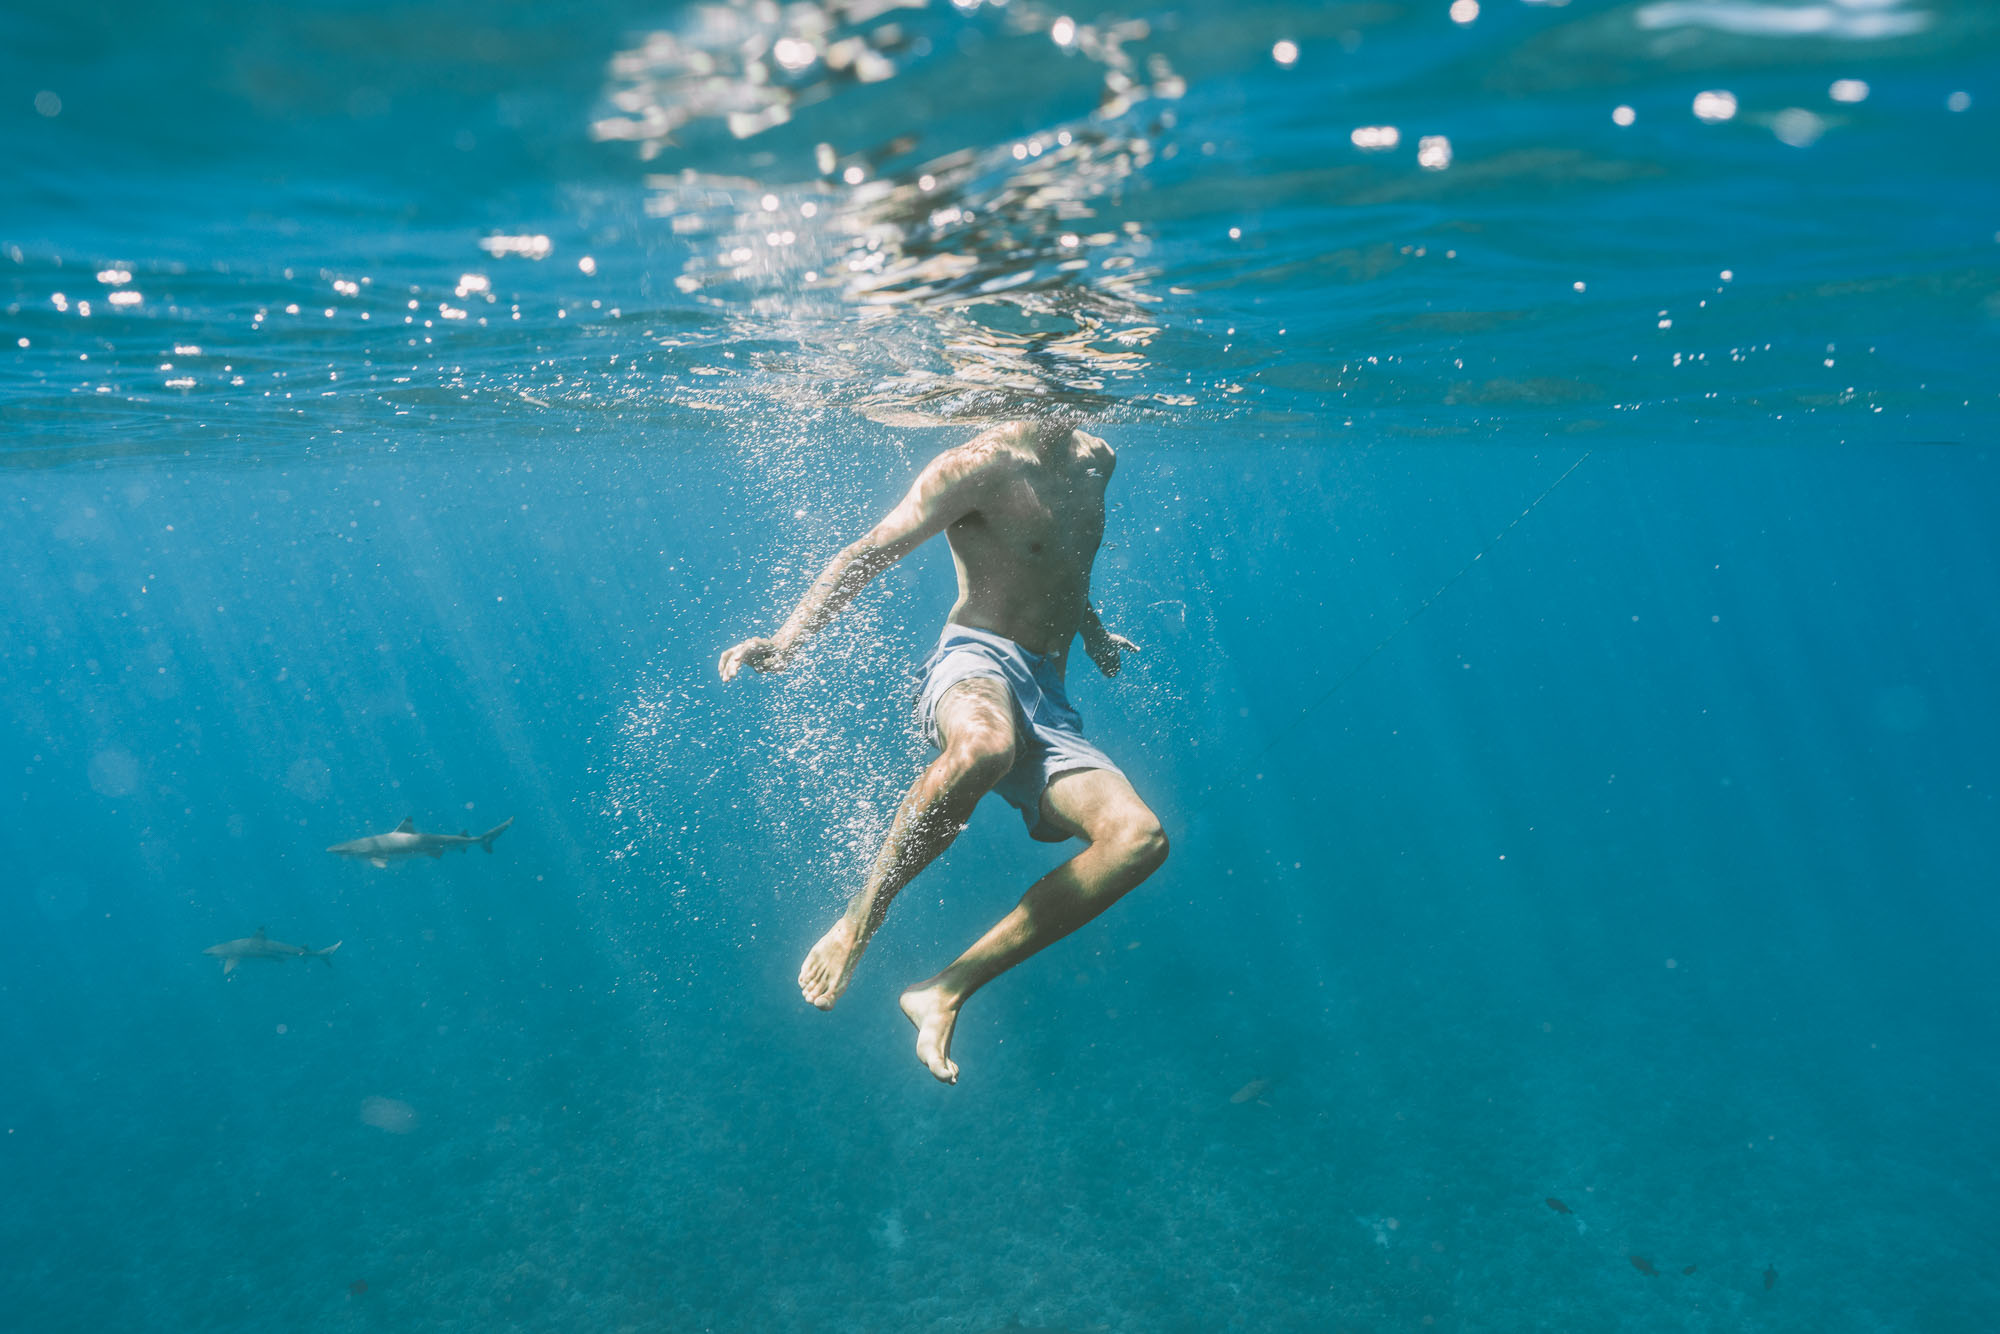 Swimming with sharks in Bora Bora Tahiti for our honeymoon via @finduslost